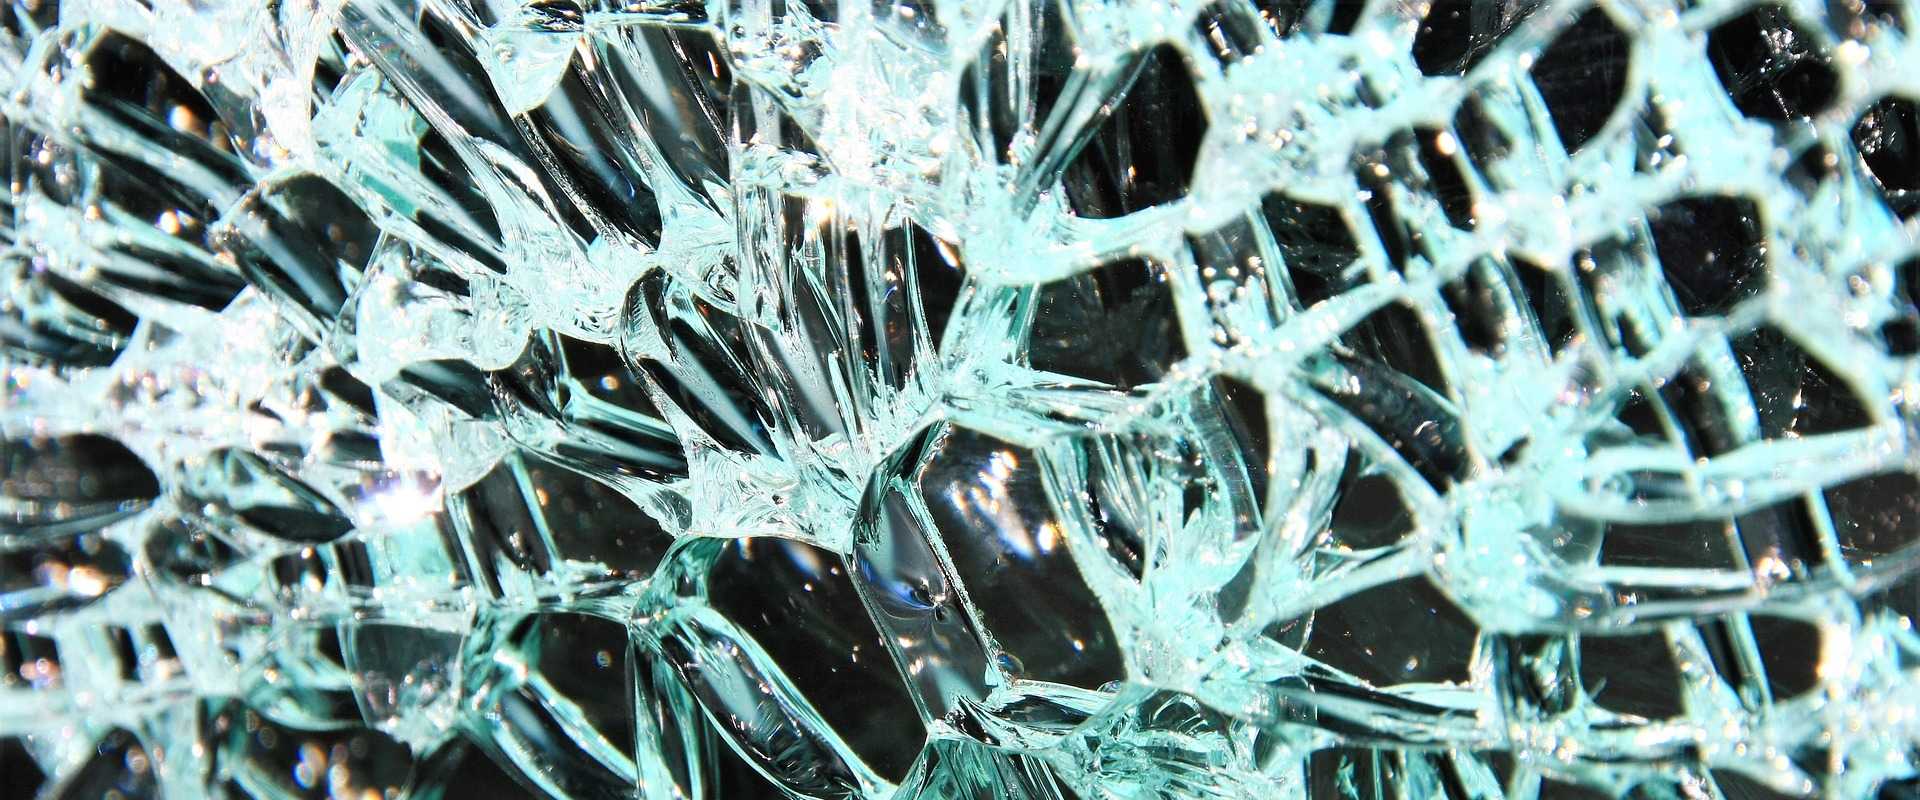 Shattered Glass Fragments